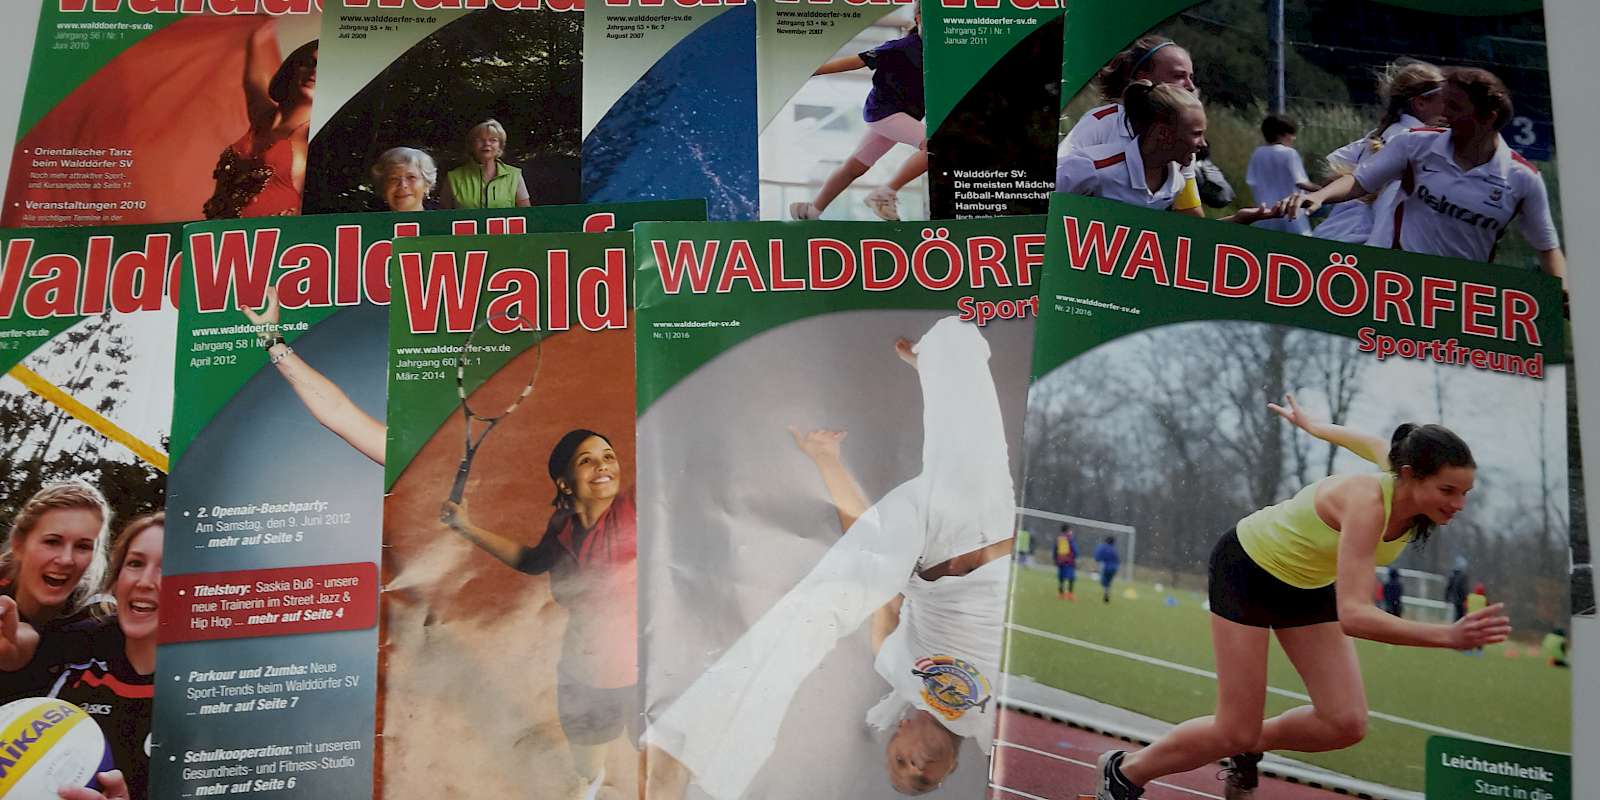 Walddörfer Sportfreund - Vereinsmagazin des Walddörfer Sportvereins